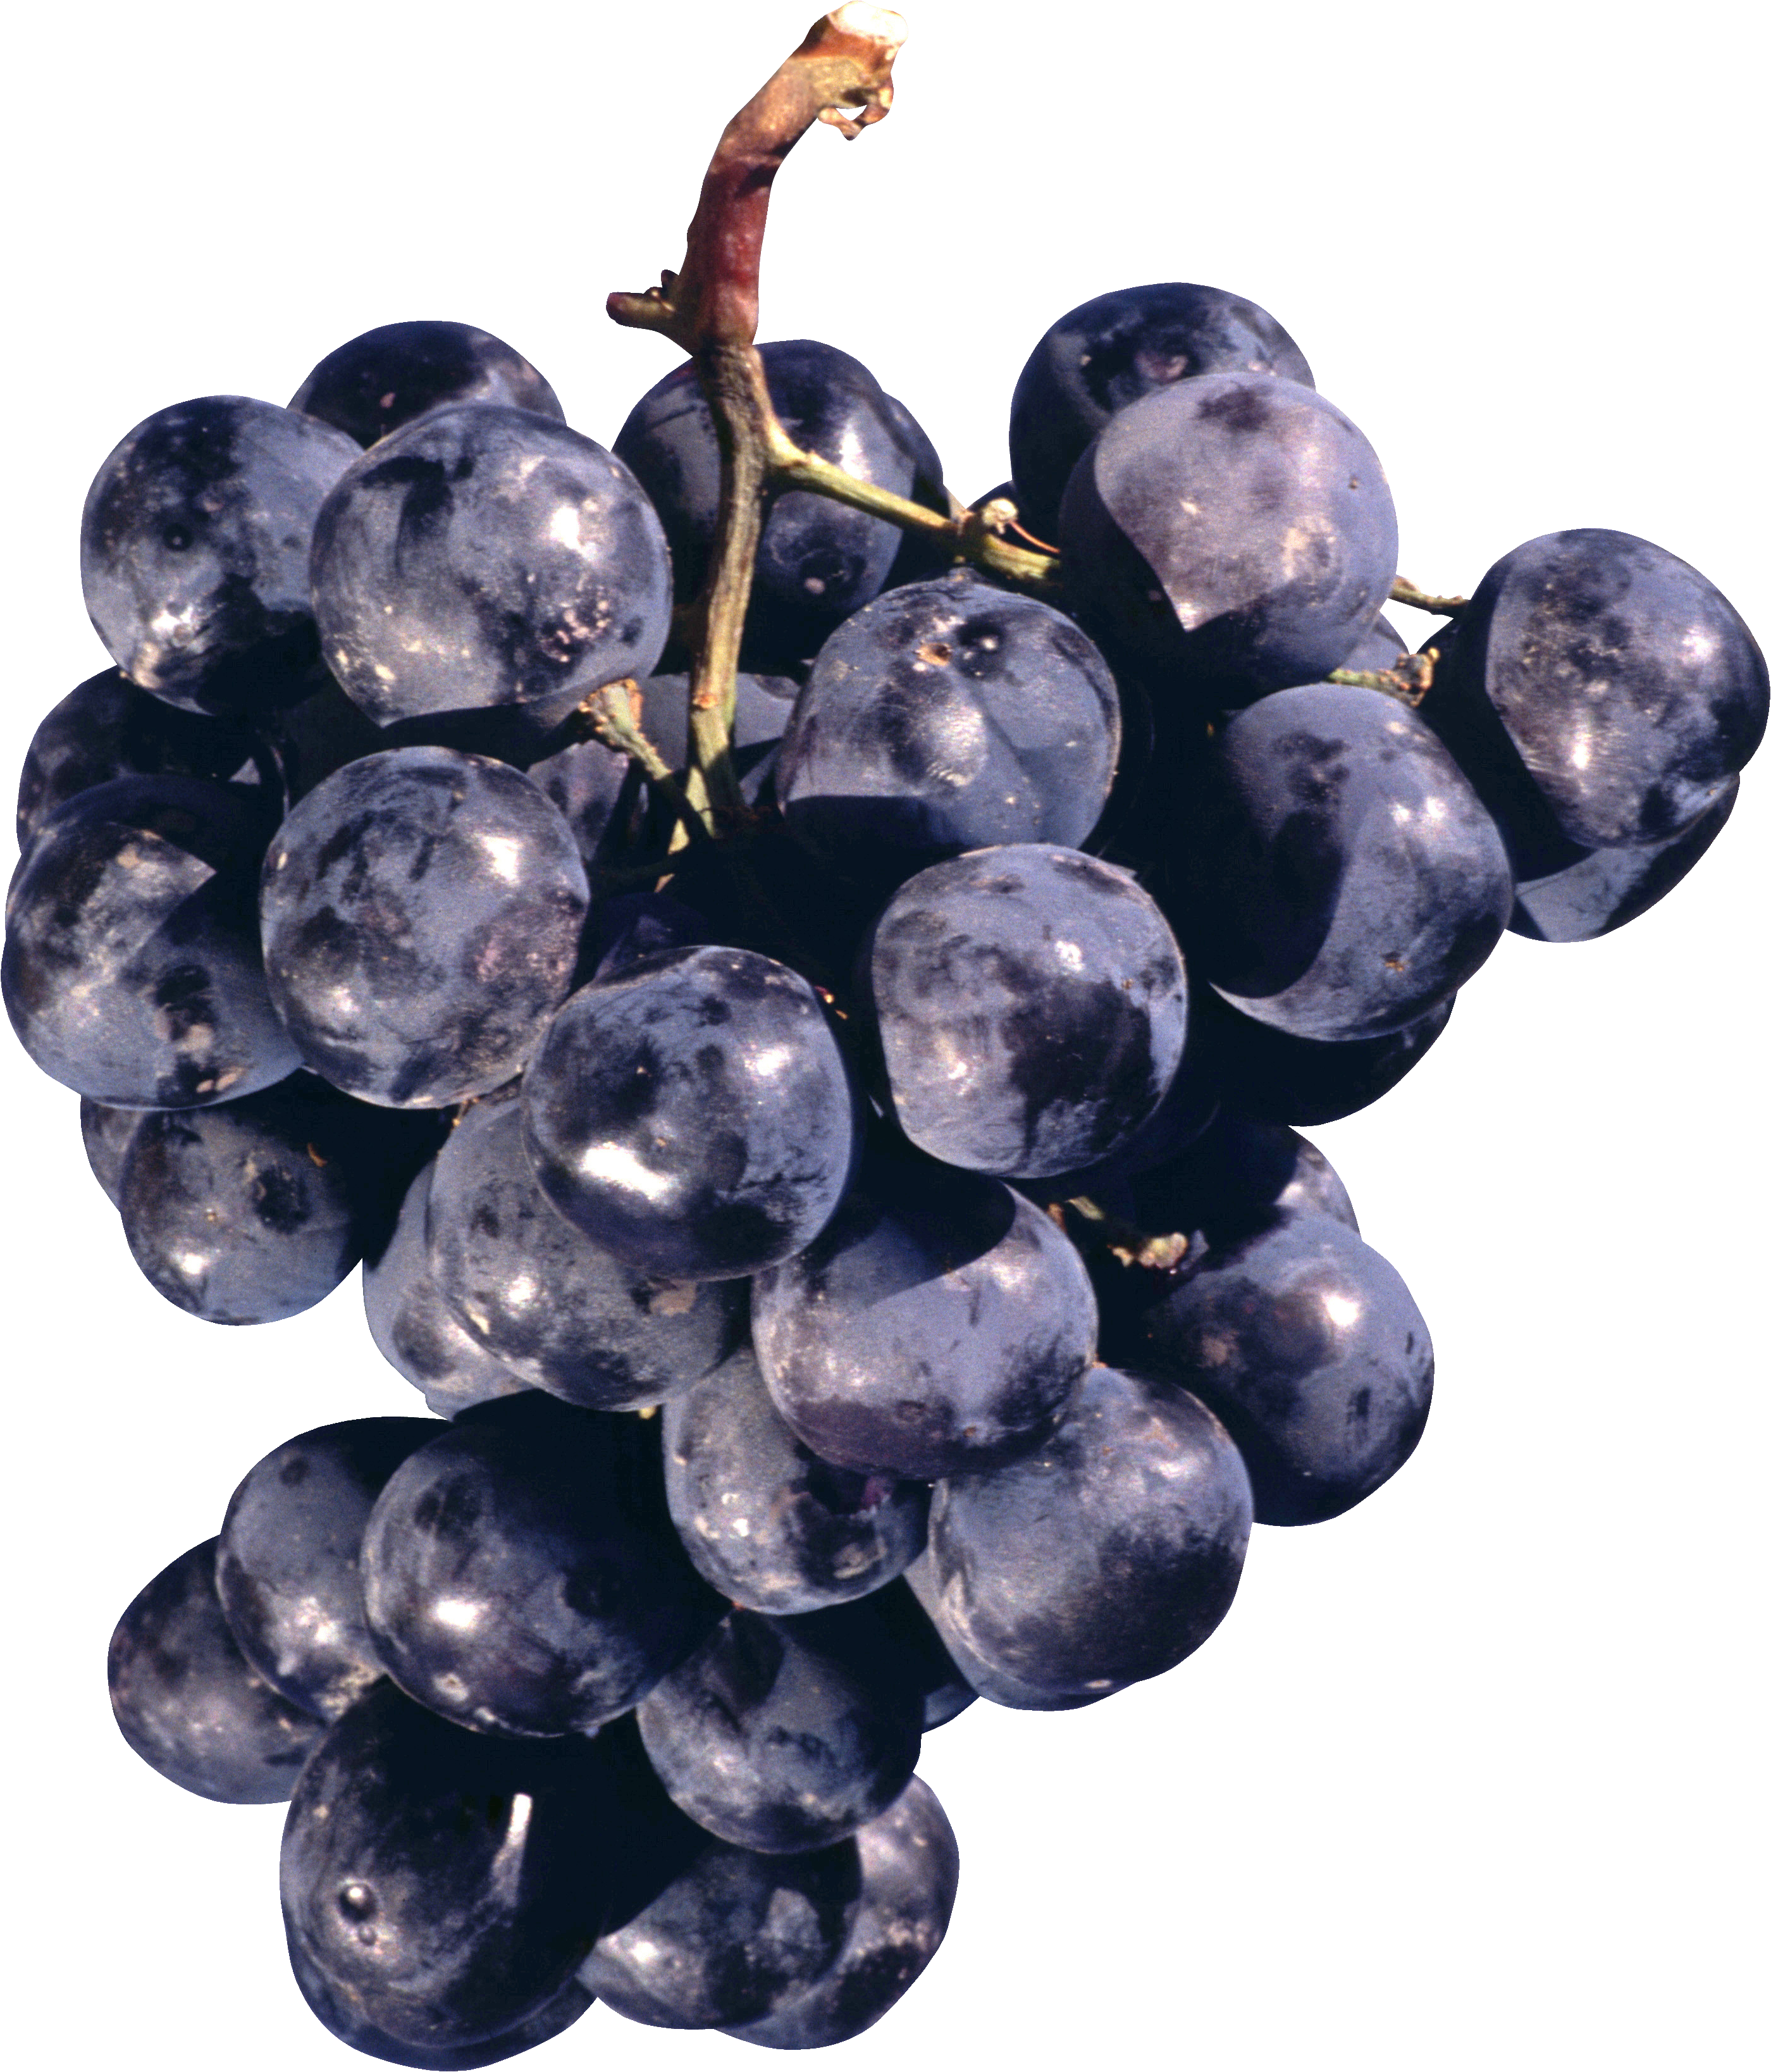 Black grapes png image. Grape clipart concord grape